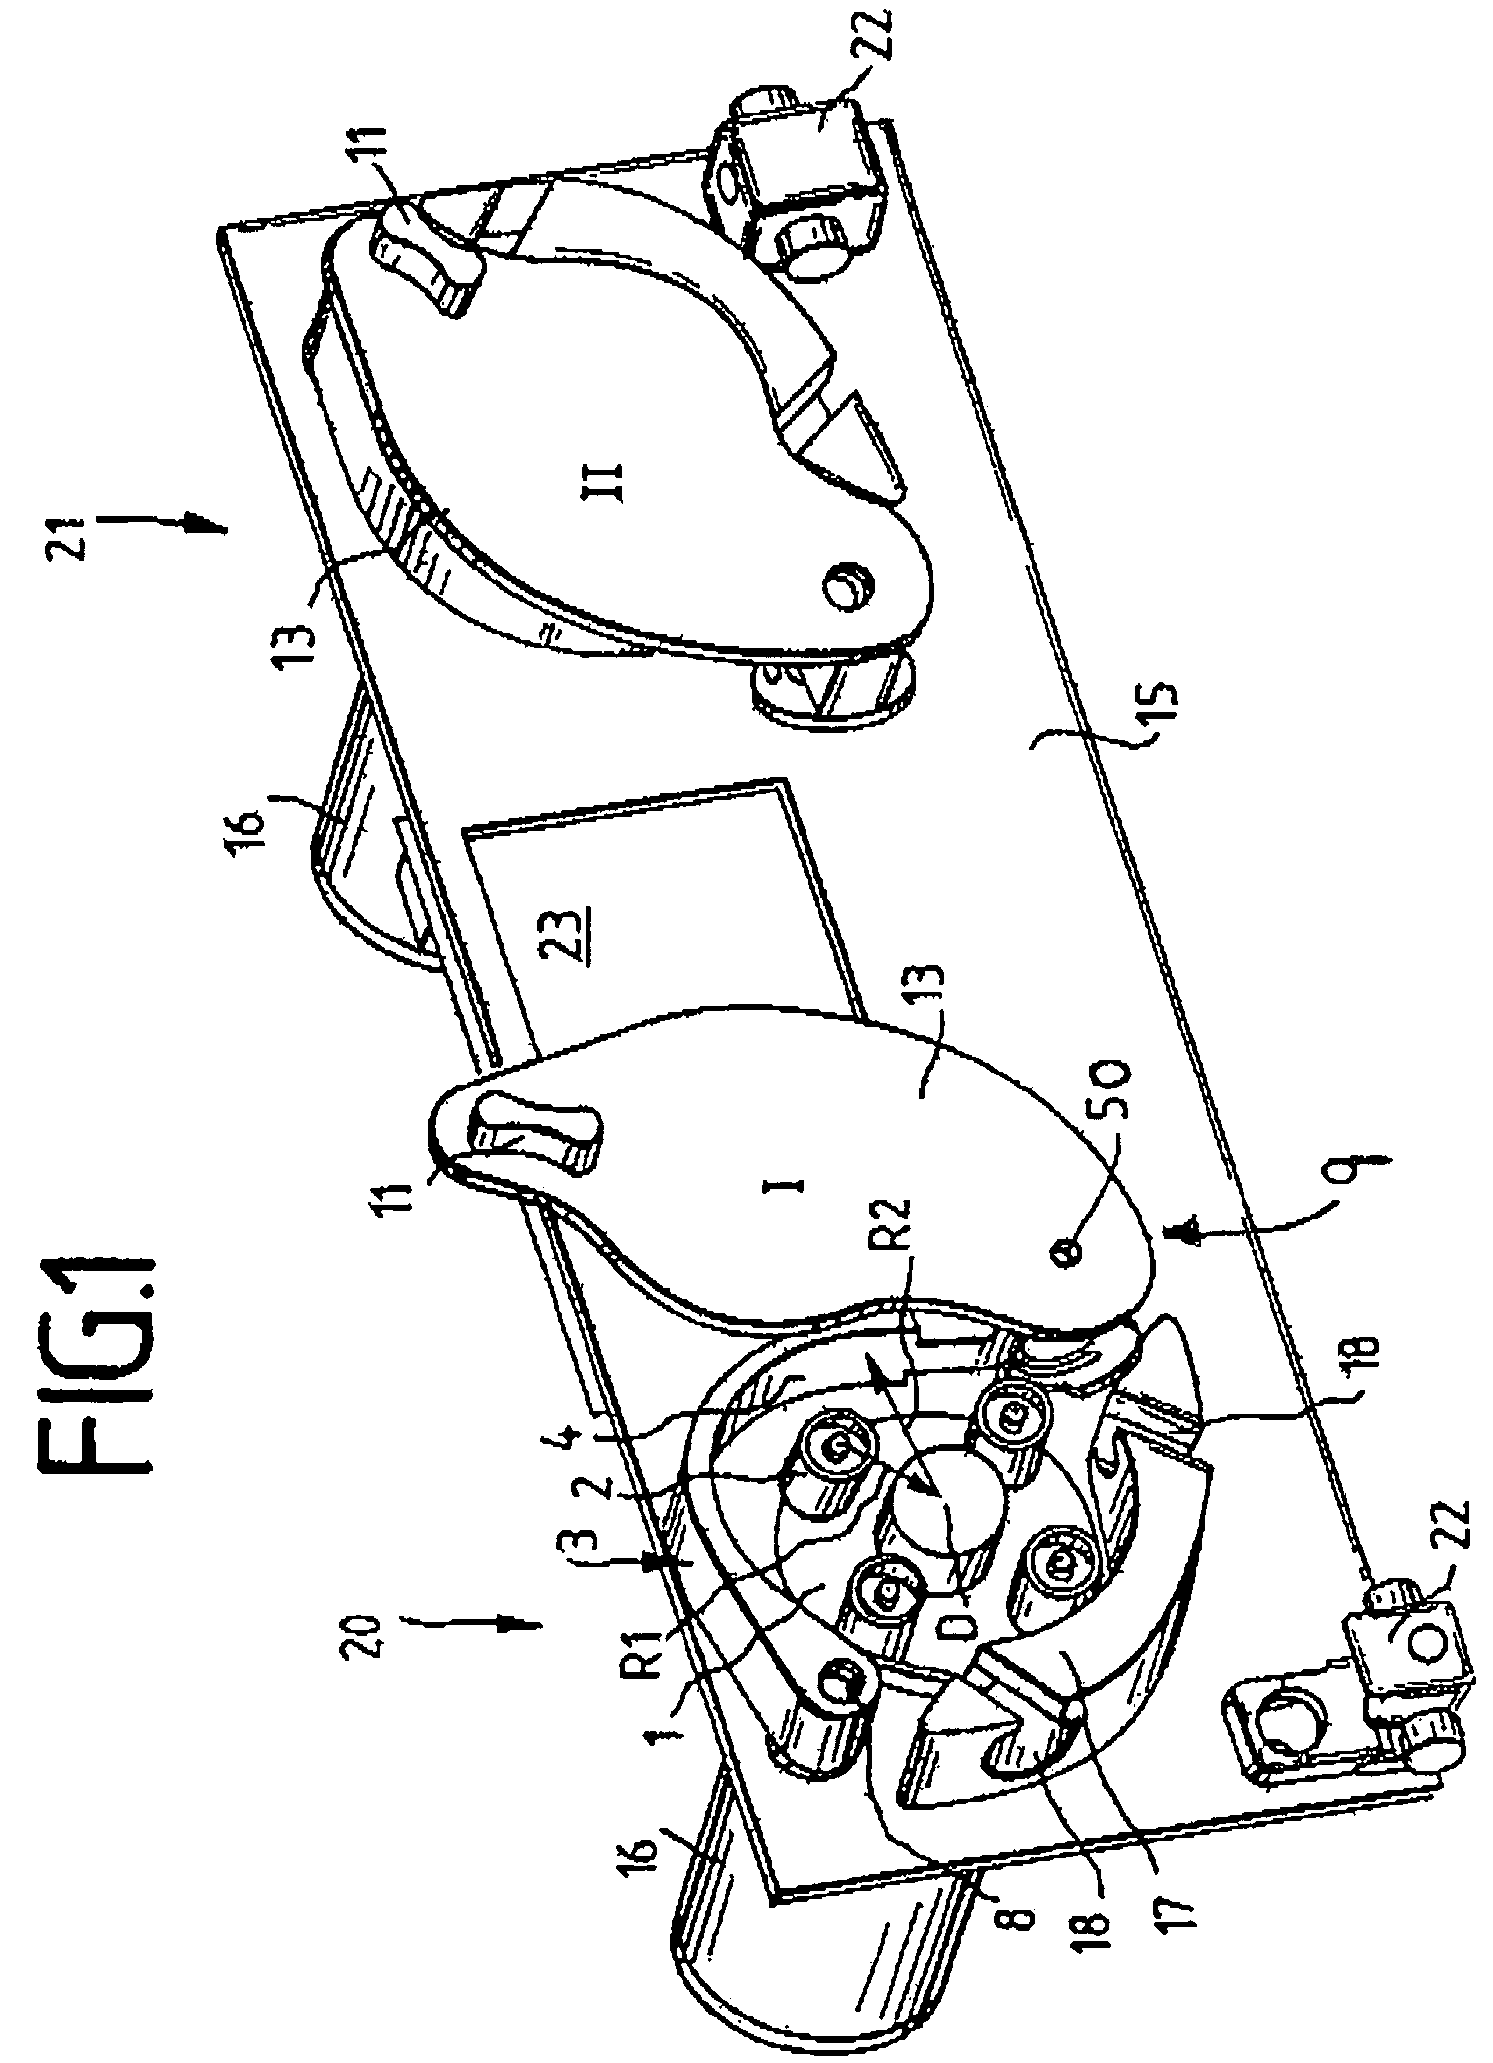 Peristalic pump having hinged backing plate